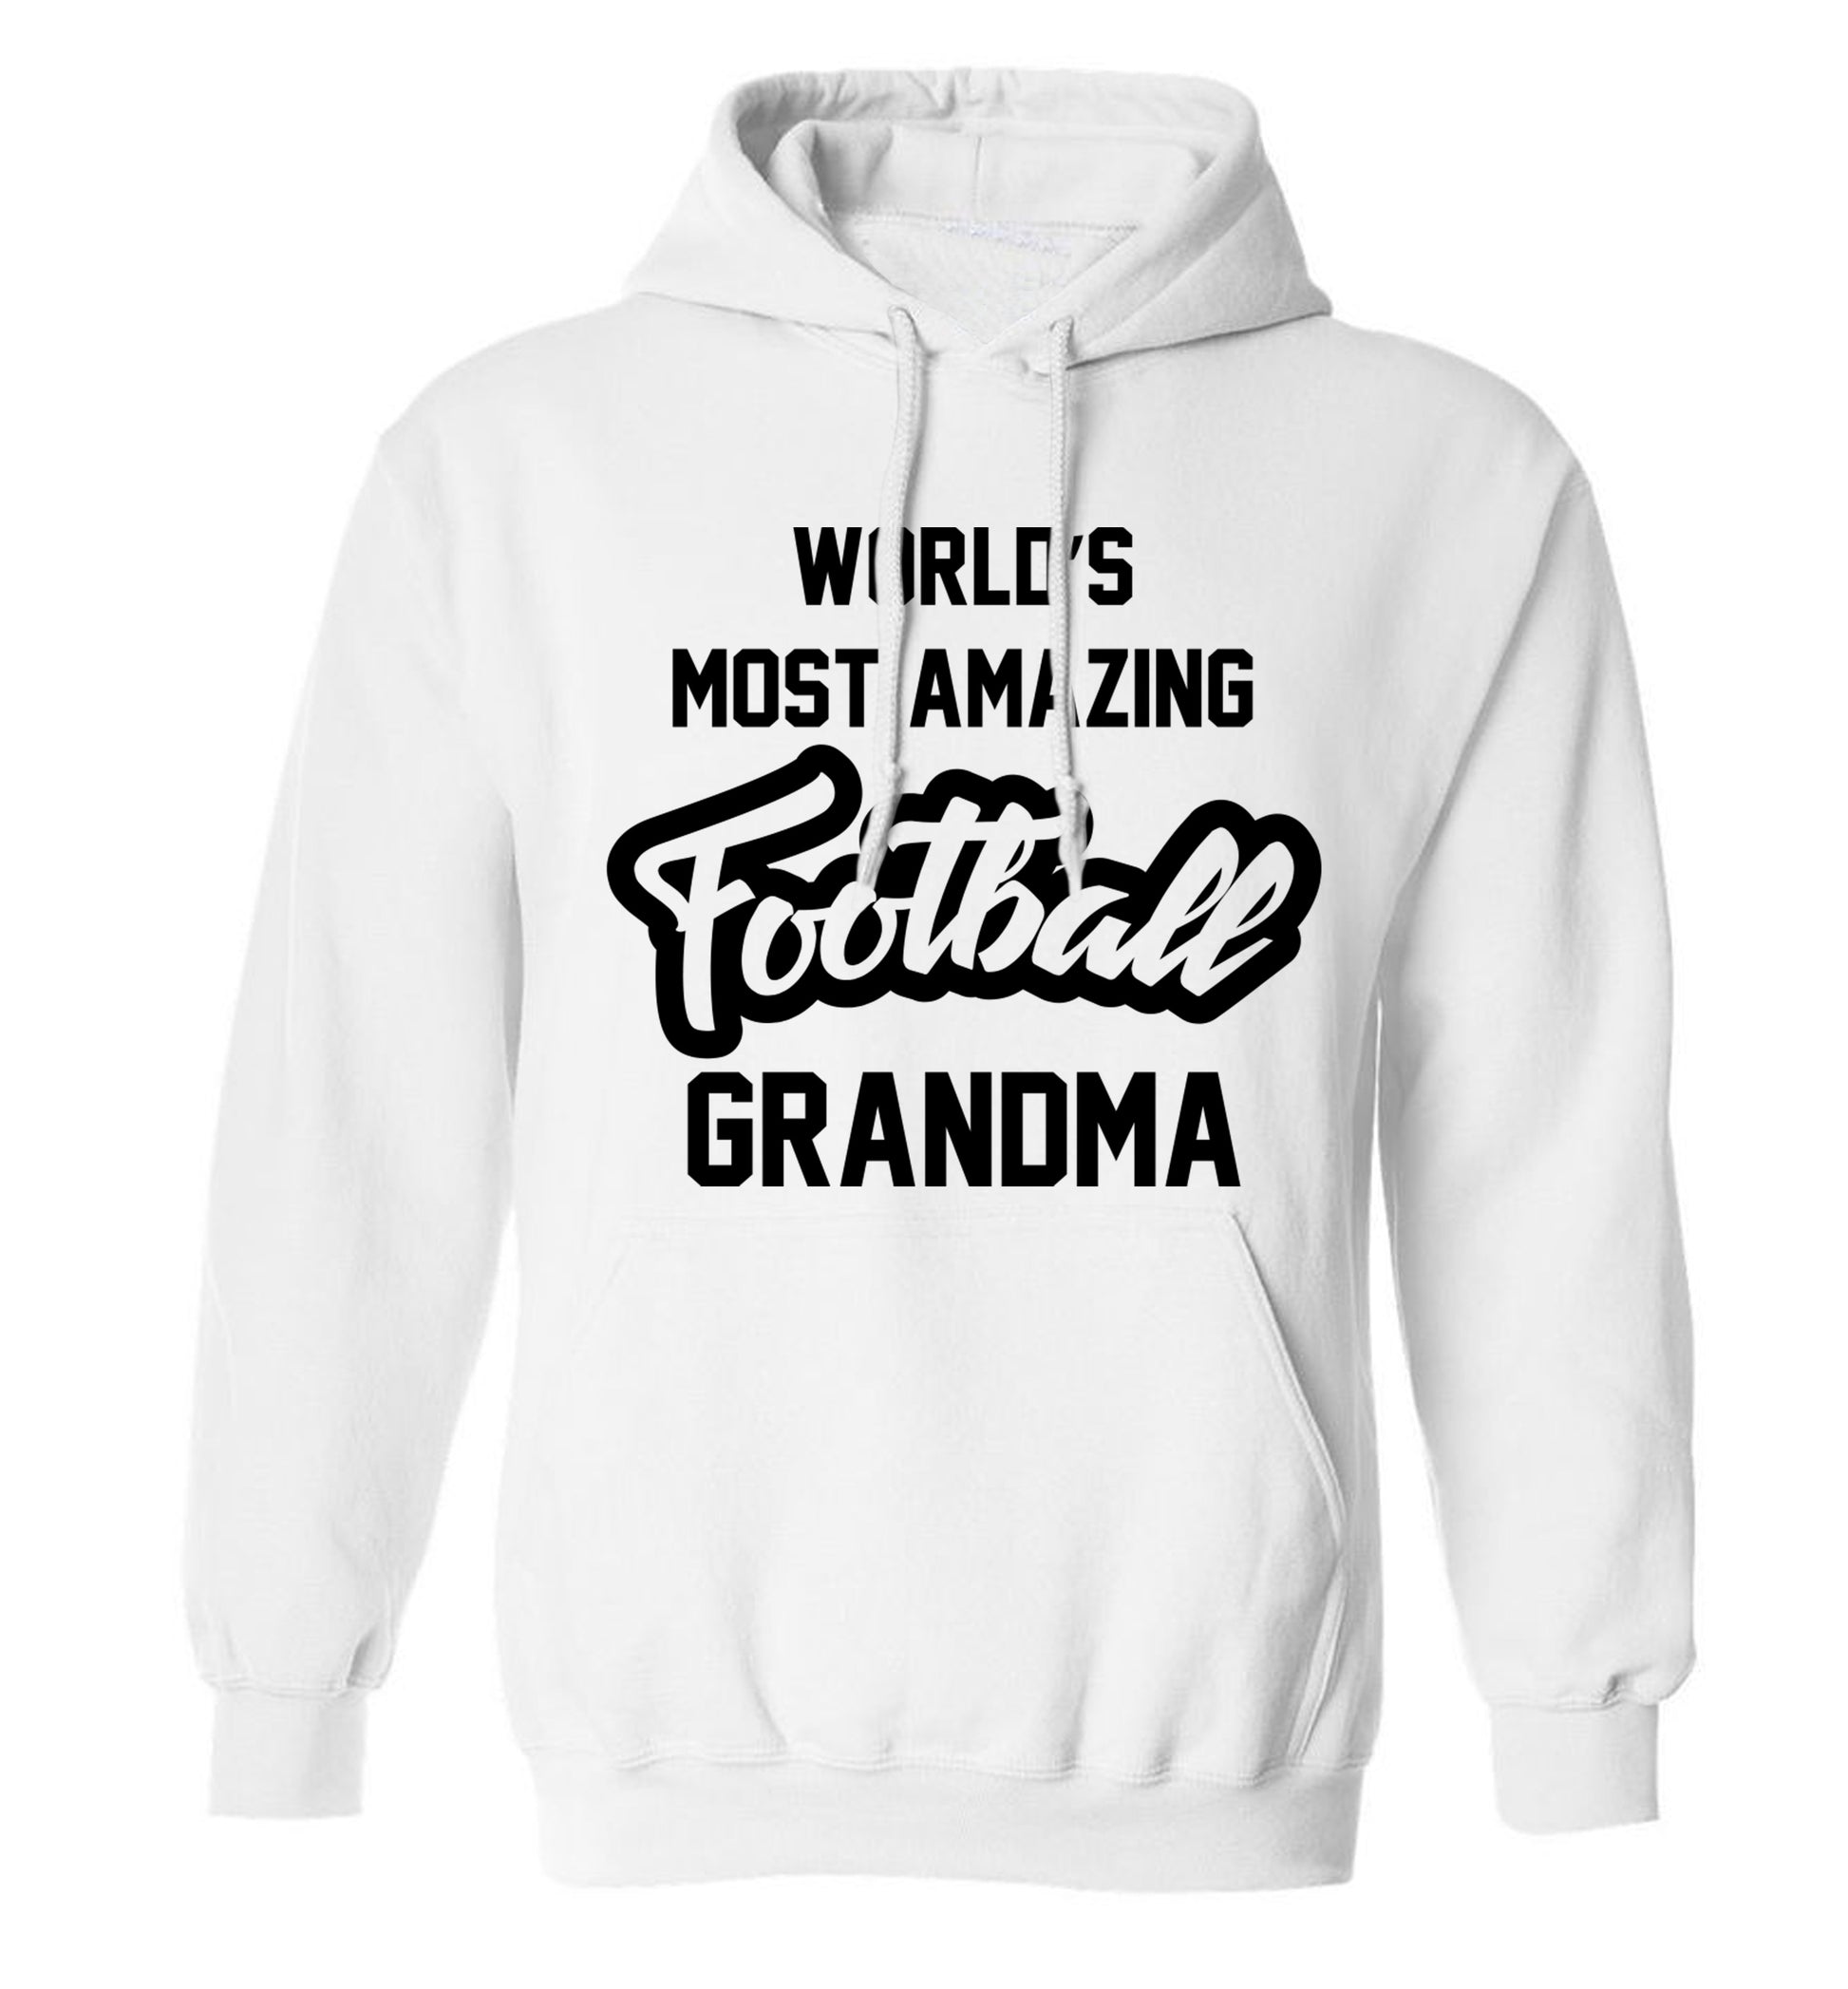 Worlds most amazing football grandma adults unisexwhite hoodie 2XL